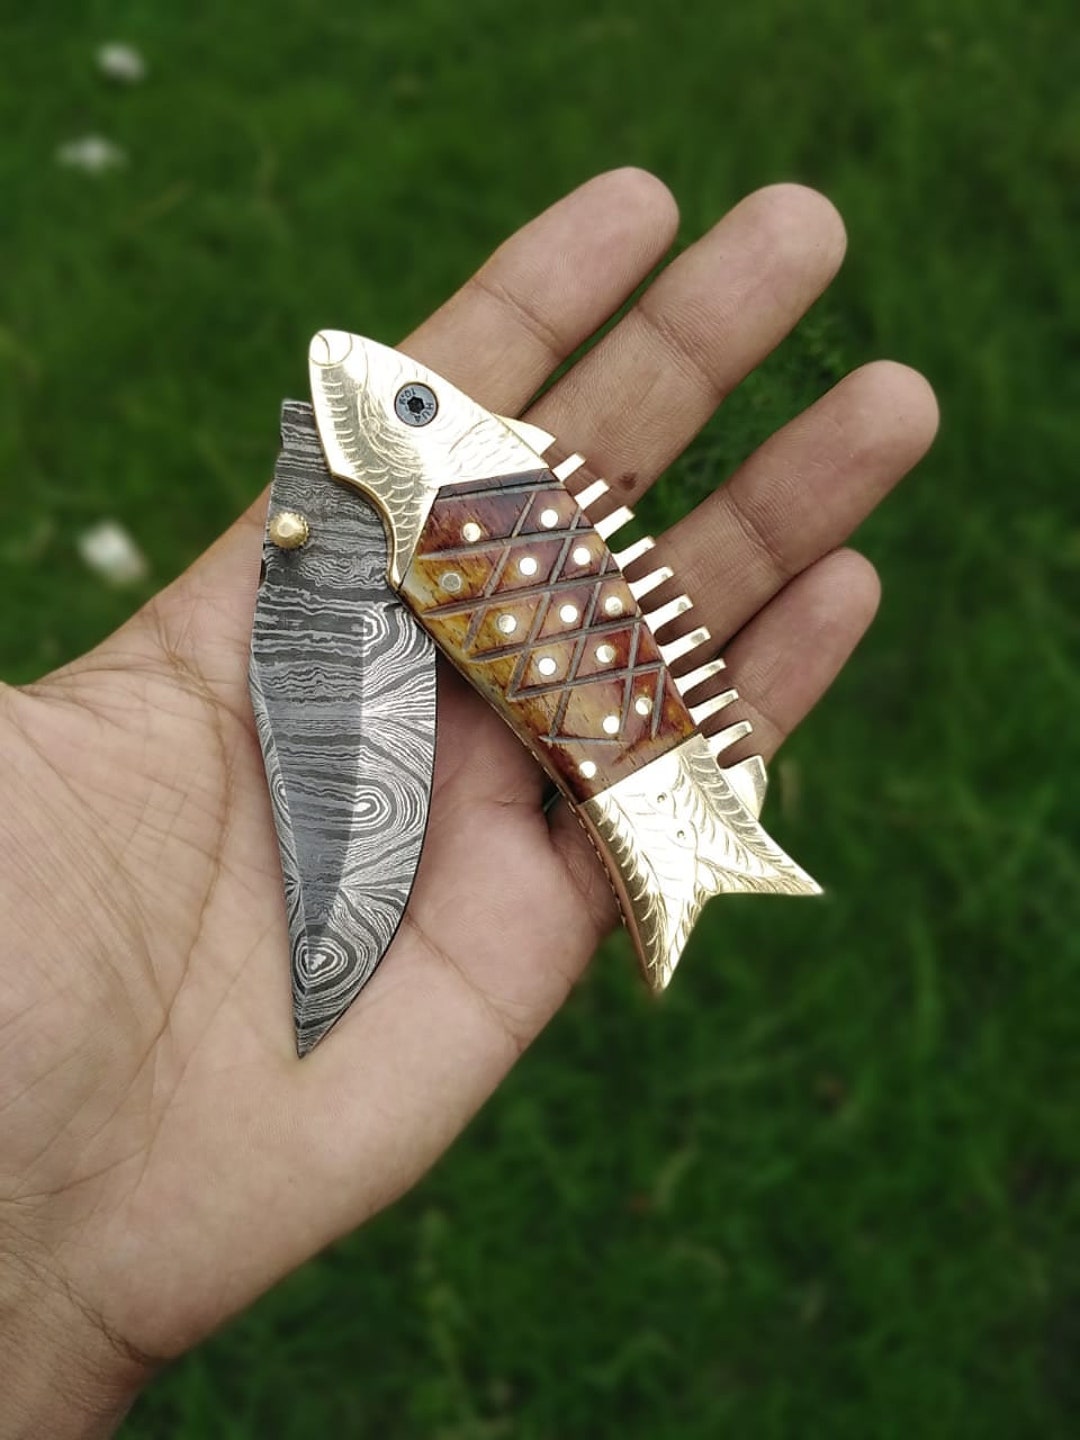 Fish-Handle Pocket Knife from Szeged